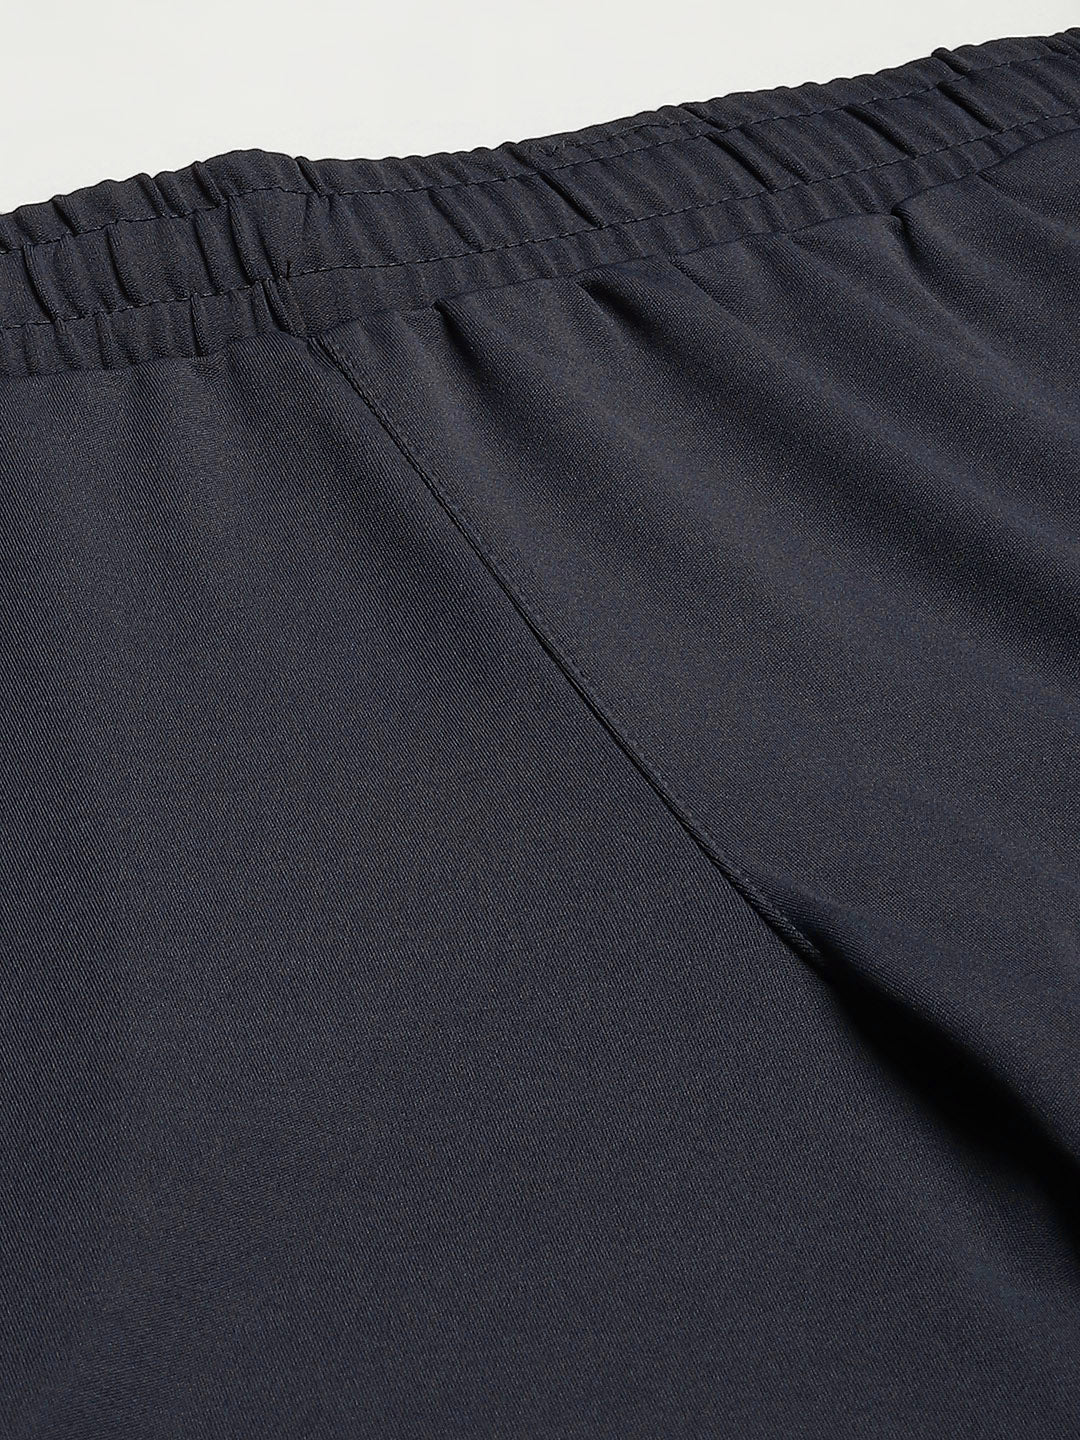 Alcis Men Charcoal Grey Solid Slim Fit Sports Shorts